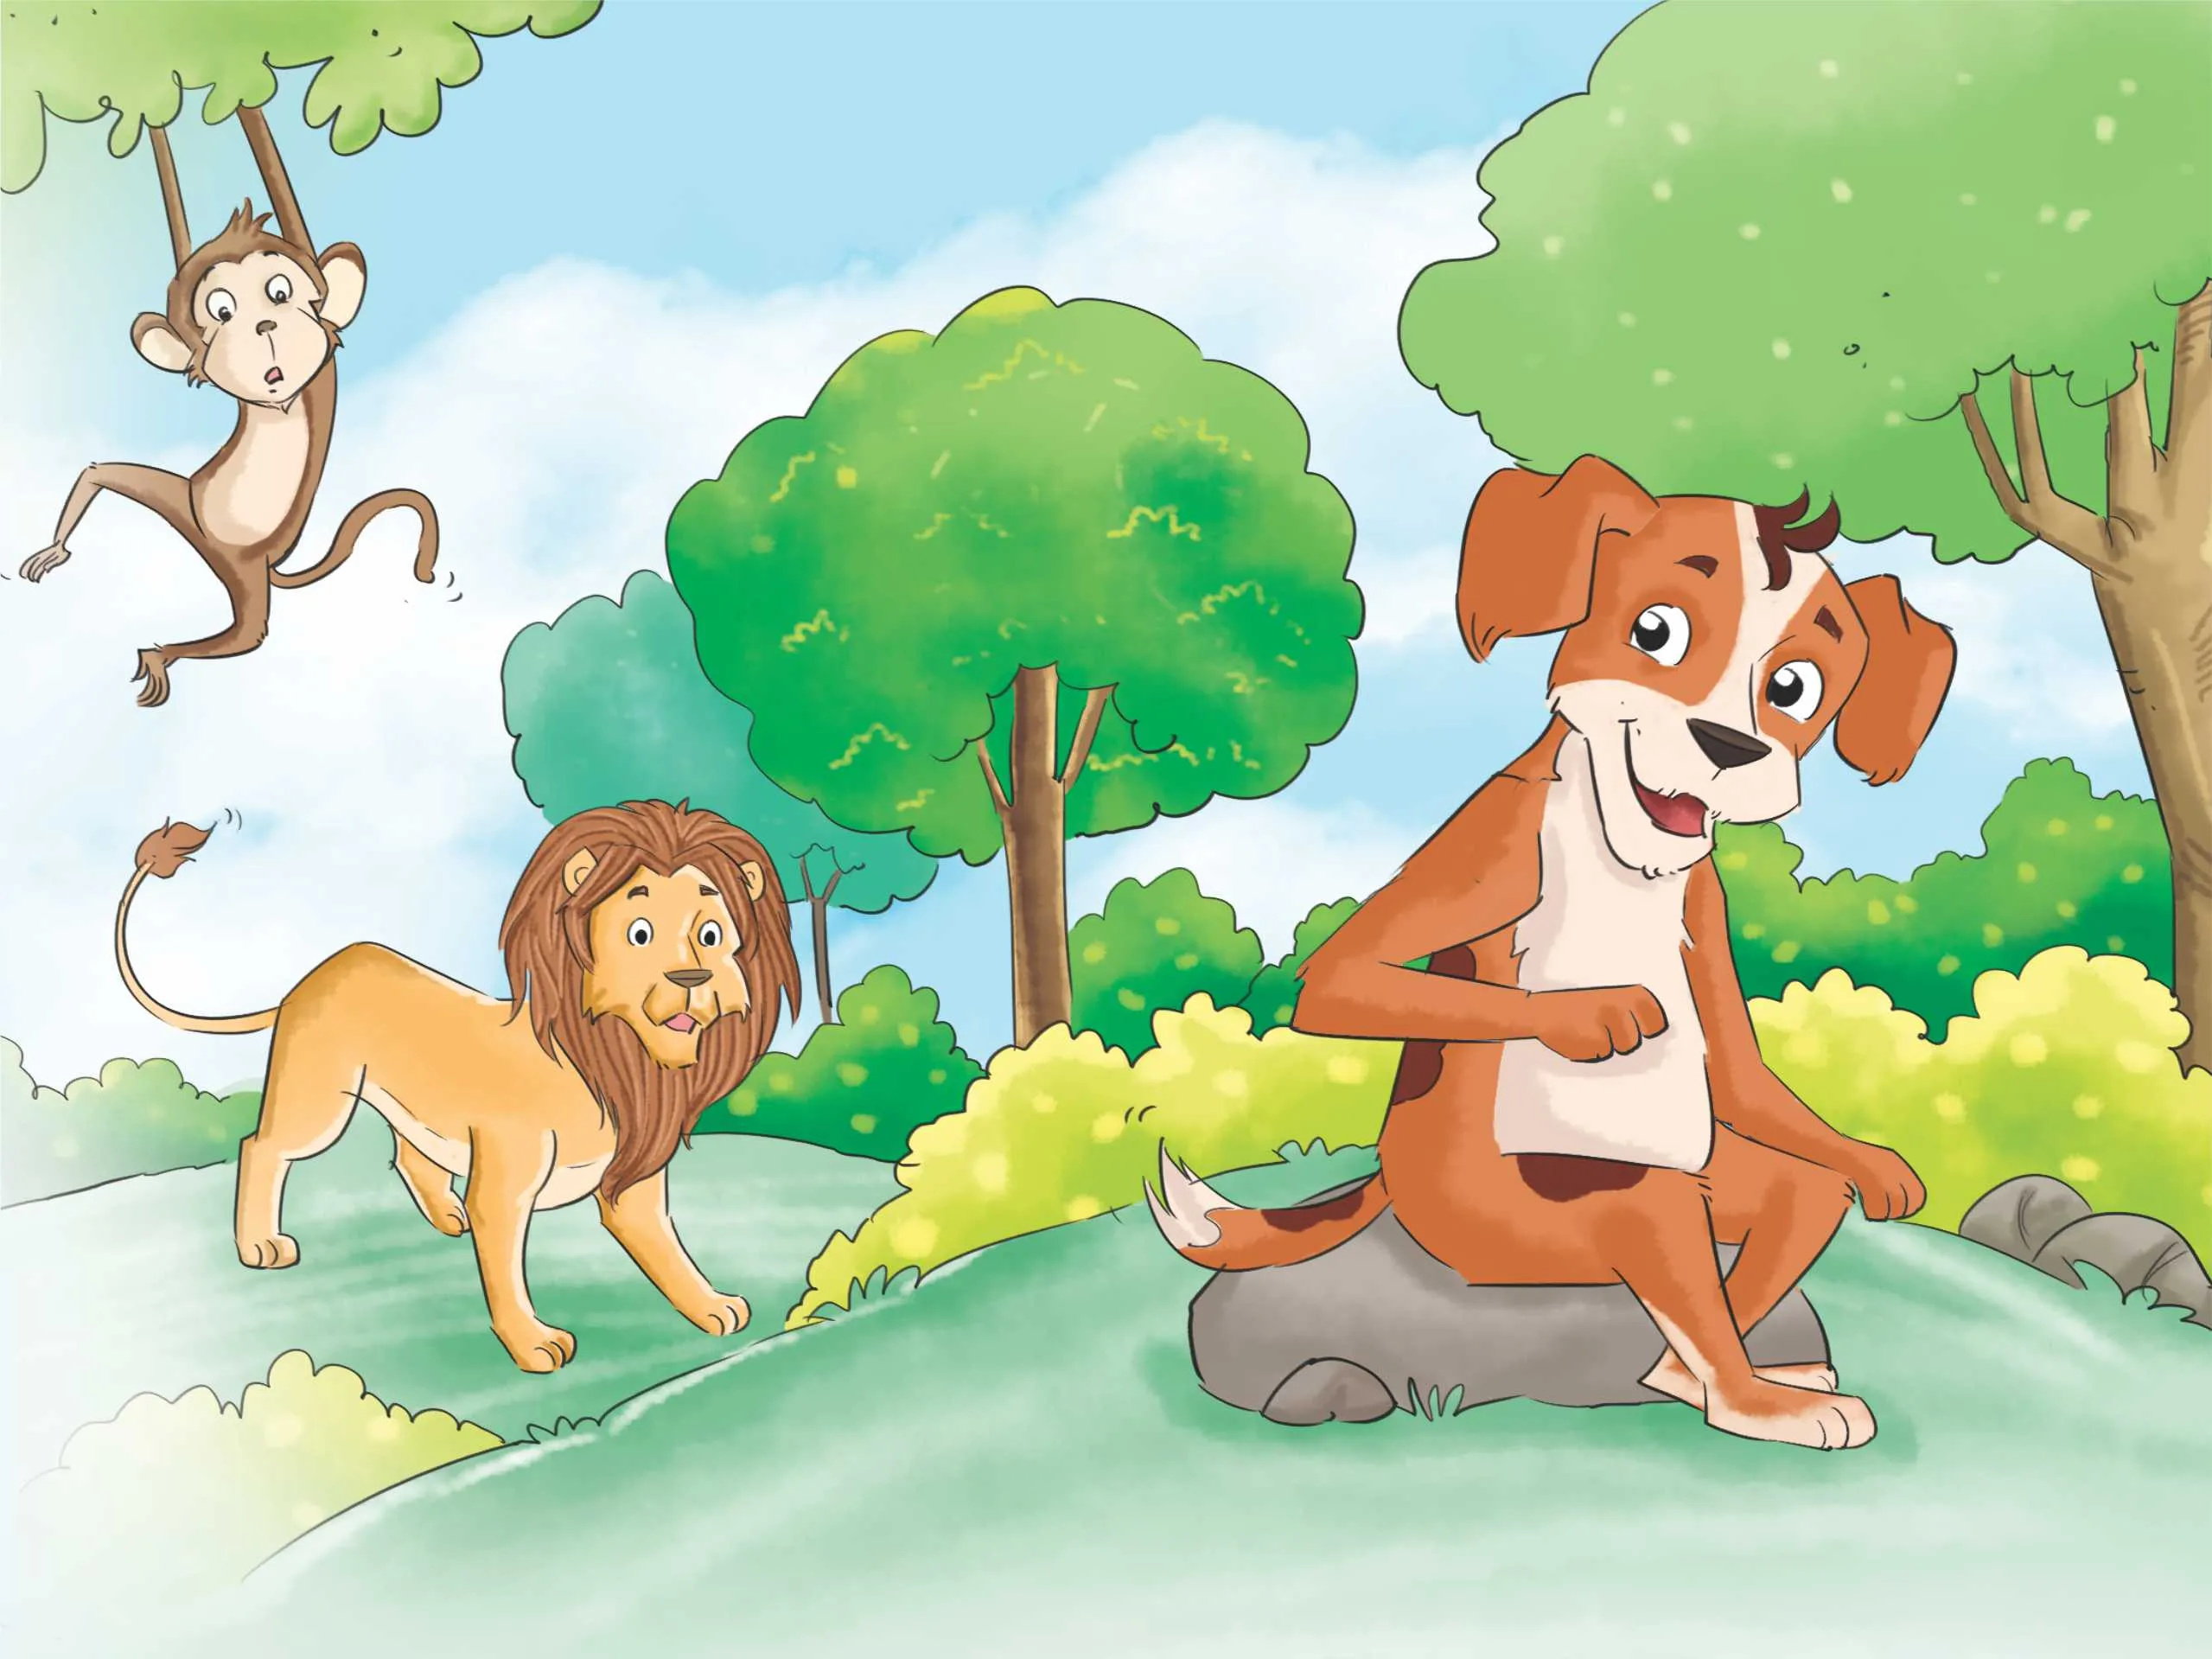 Lion and dog cartoon image